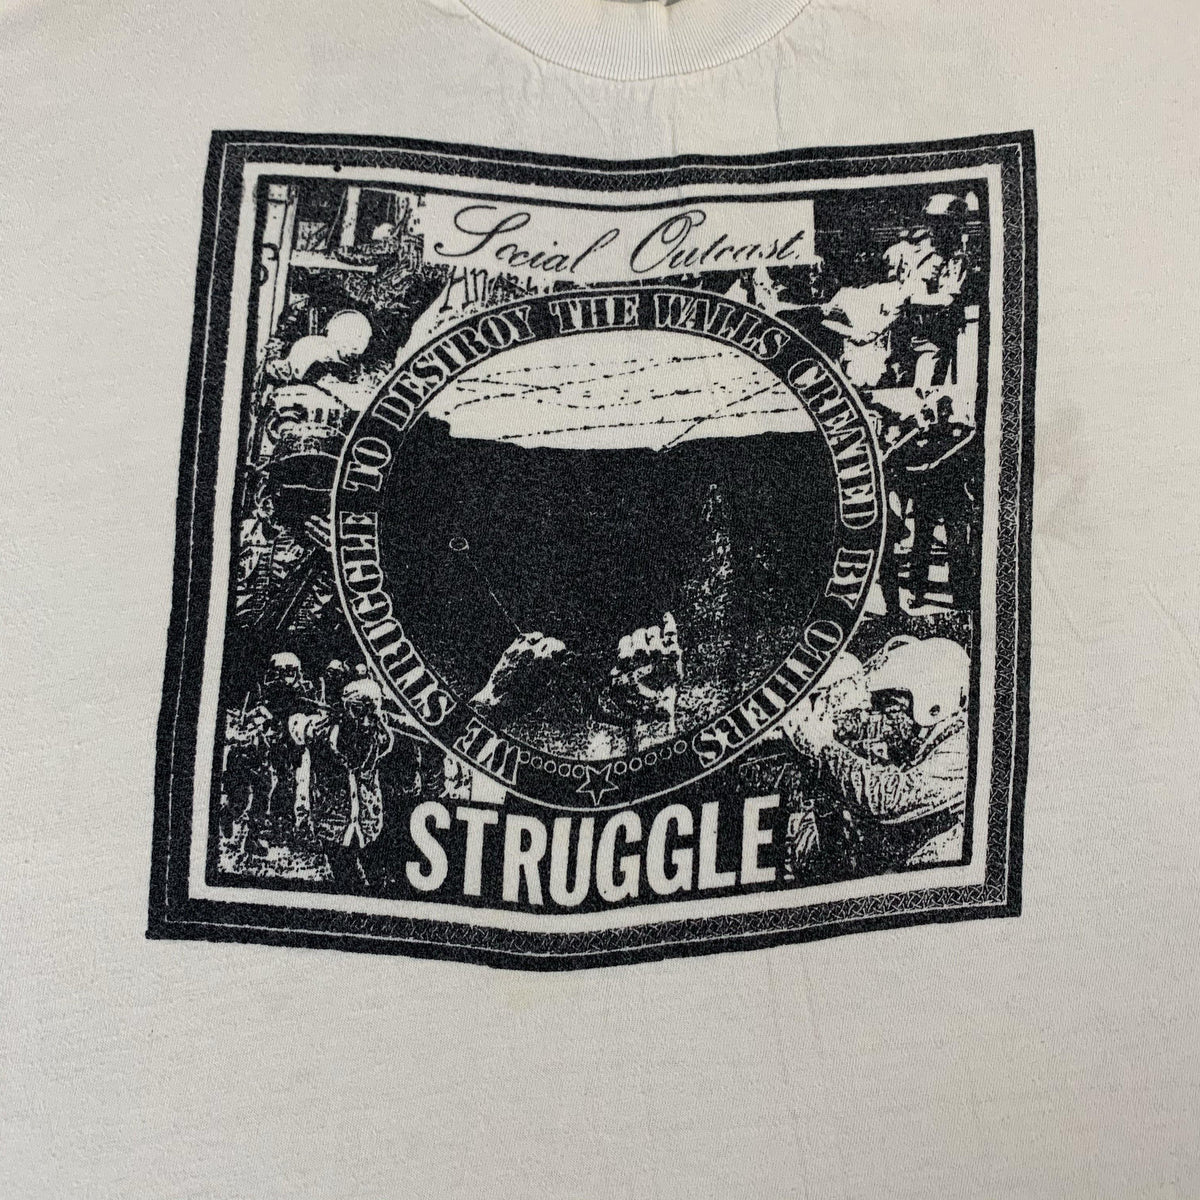 Vintage Social Outcast “Struggle” T-Shirt - jointcustodydc